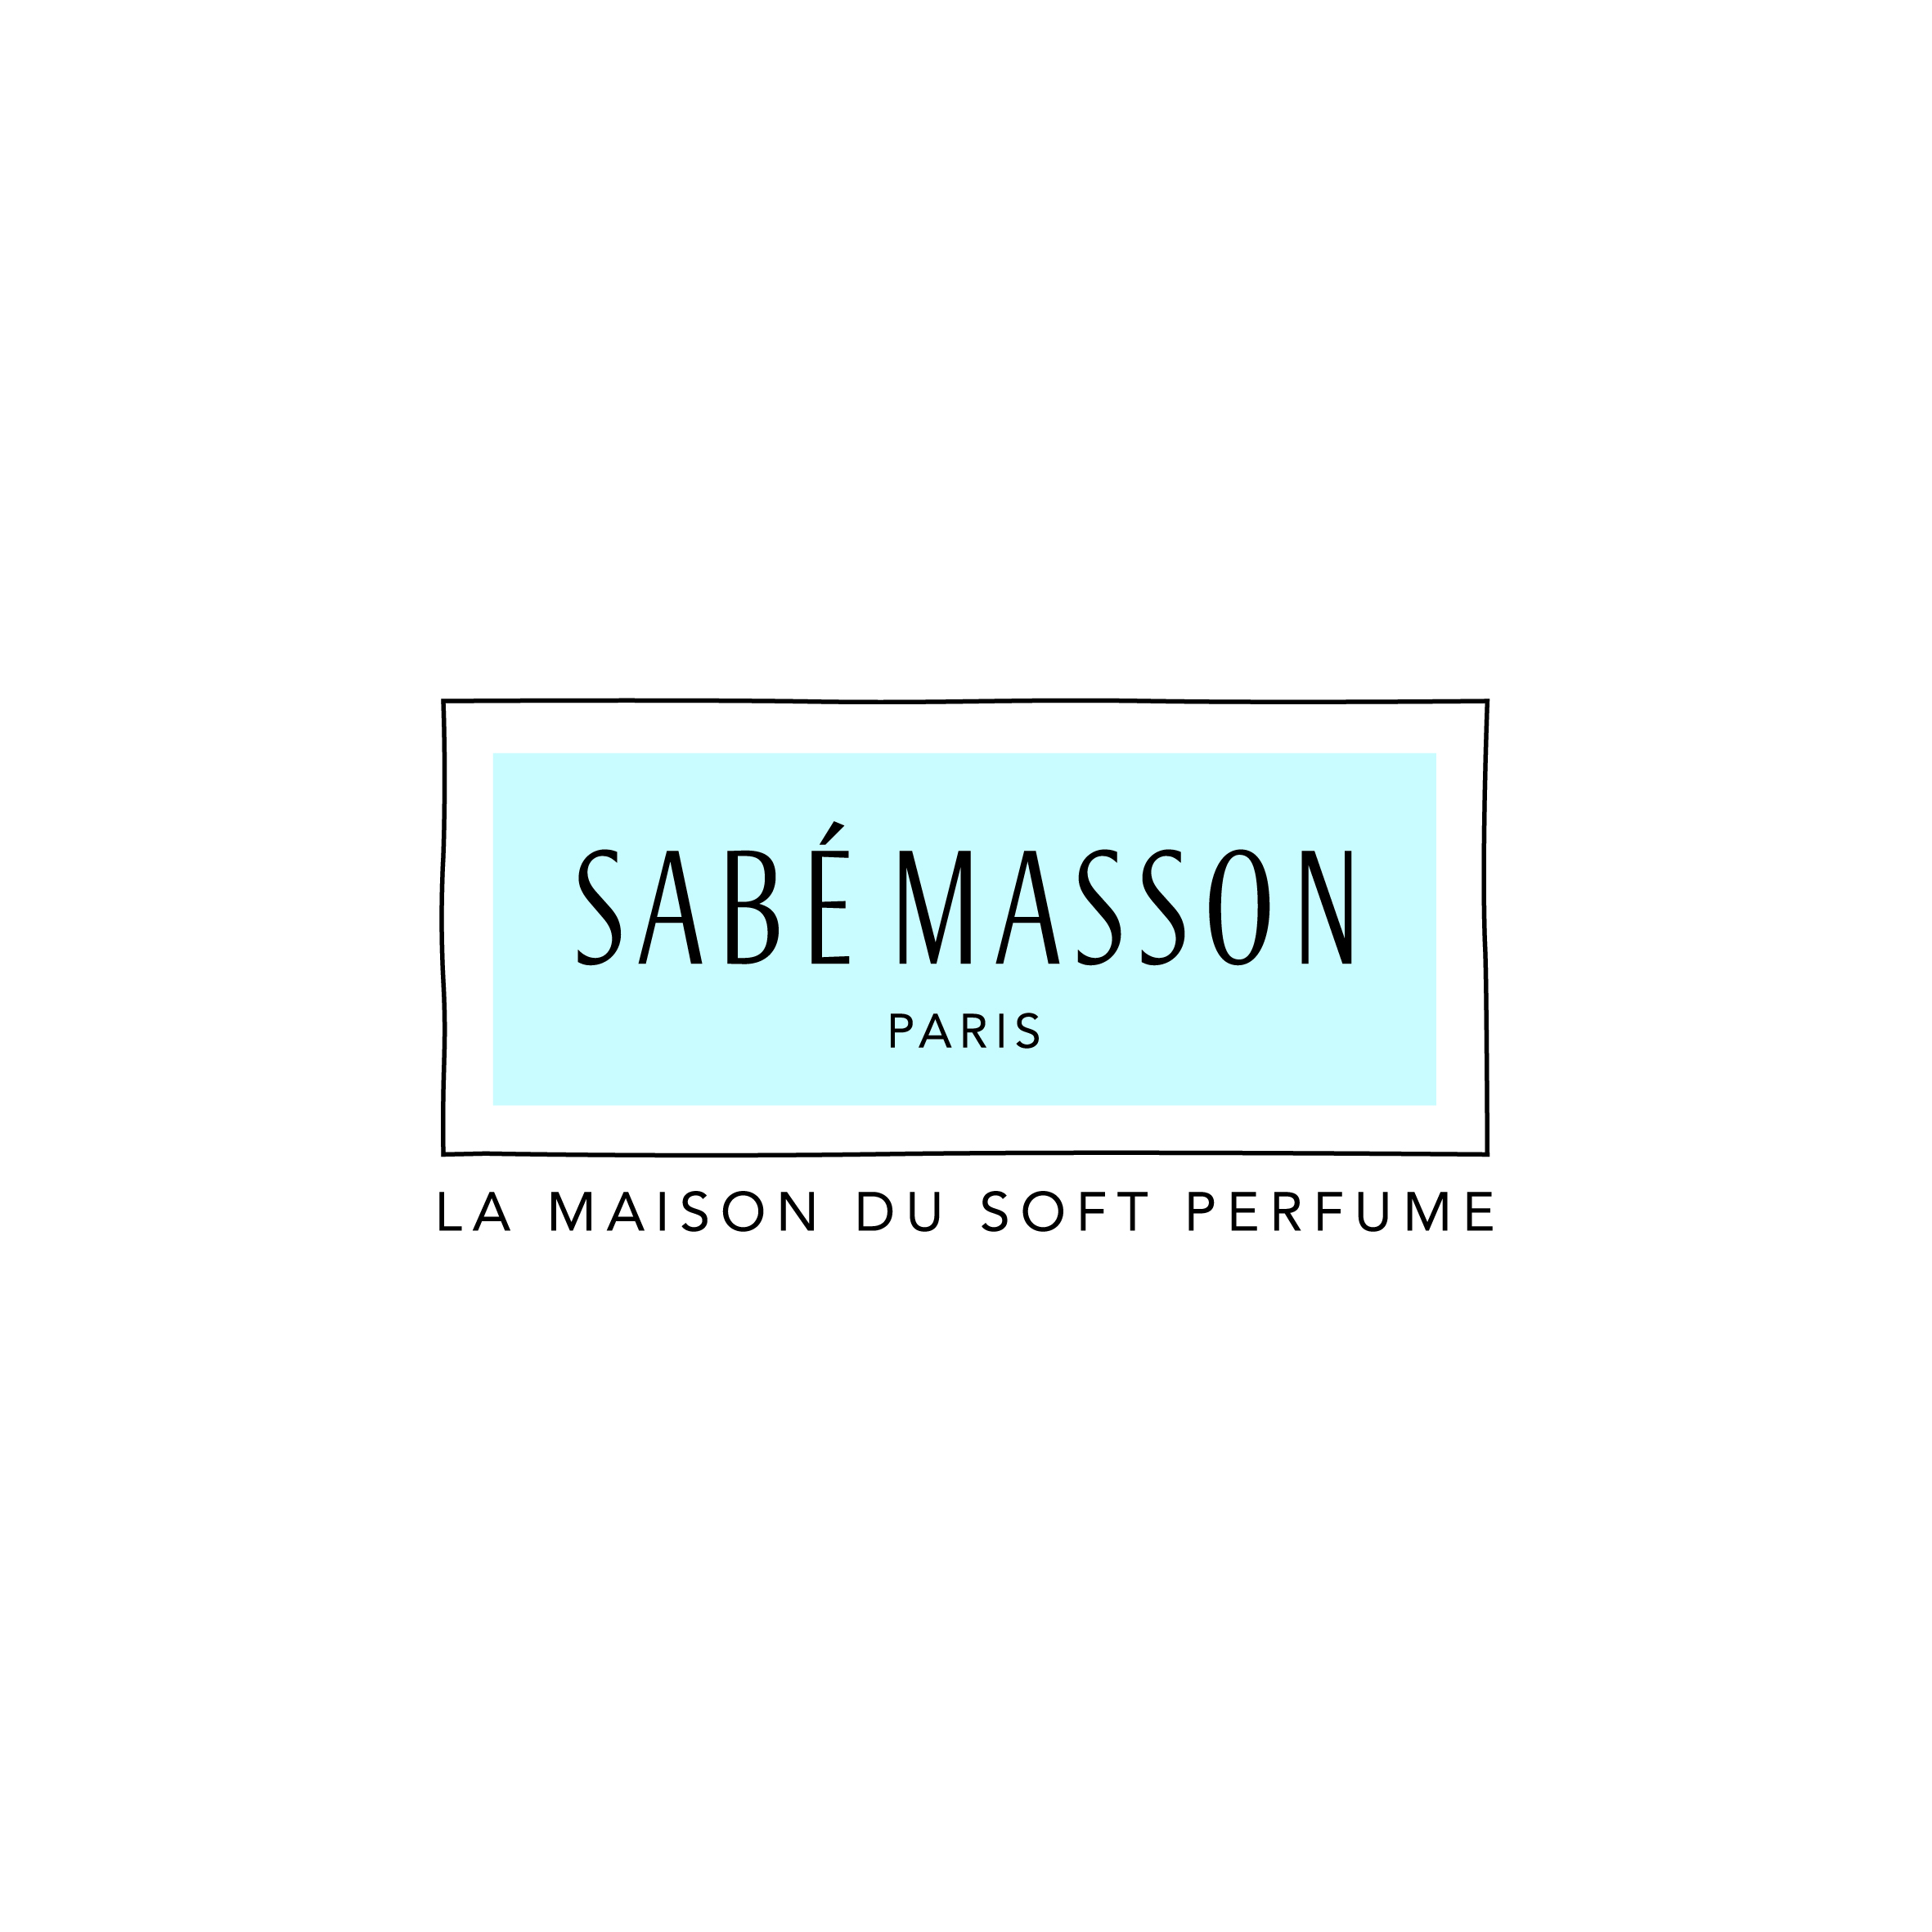 Sabé Masson